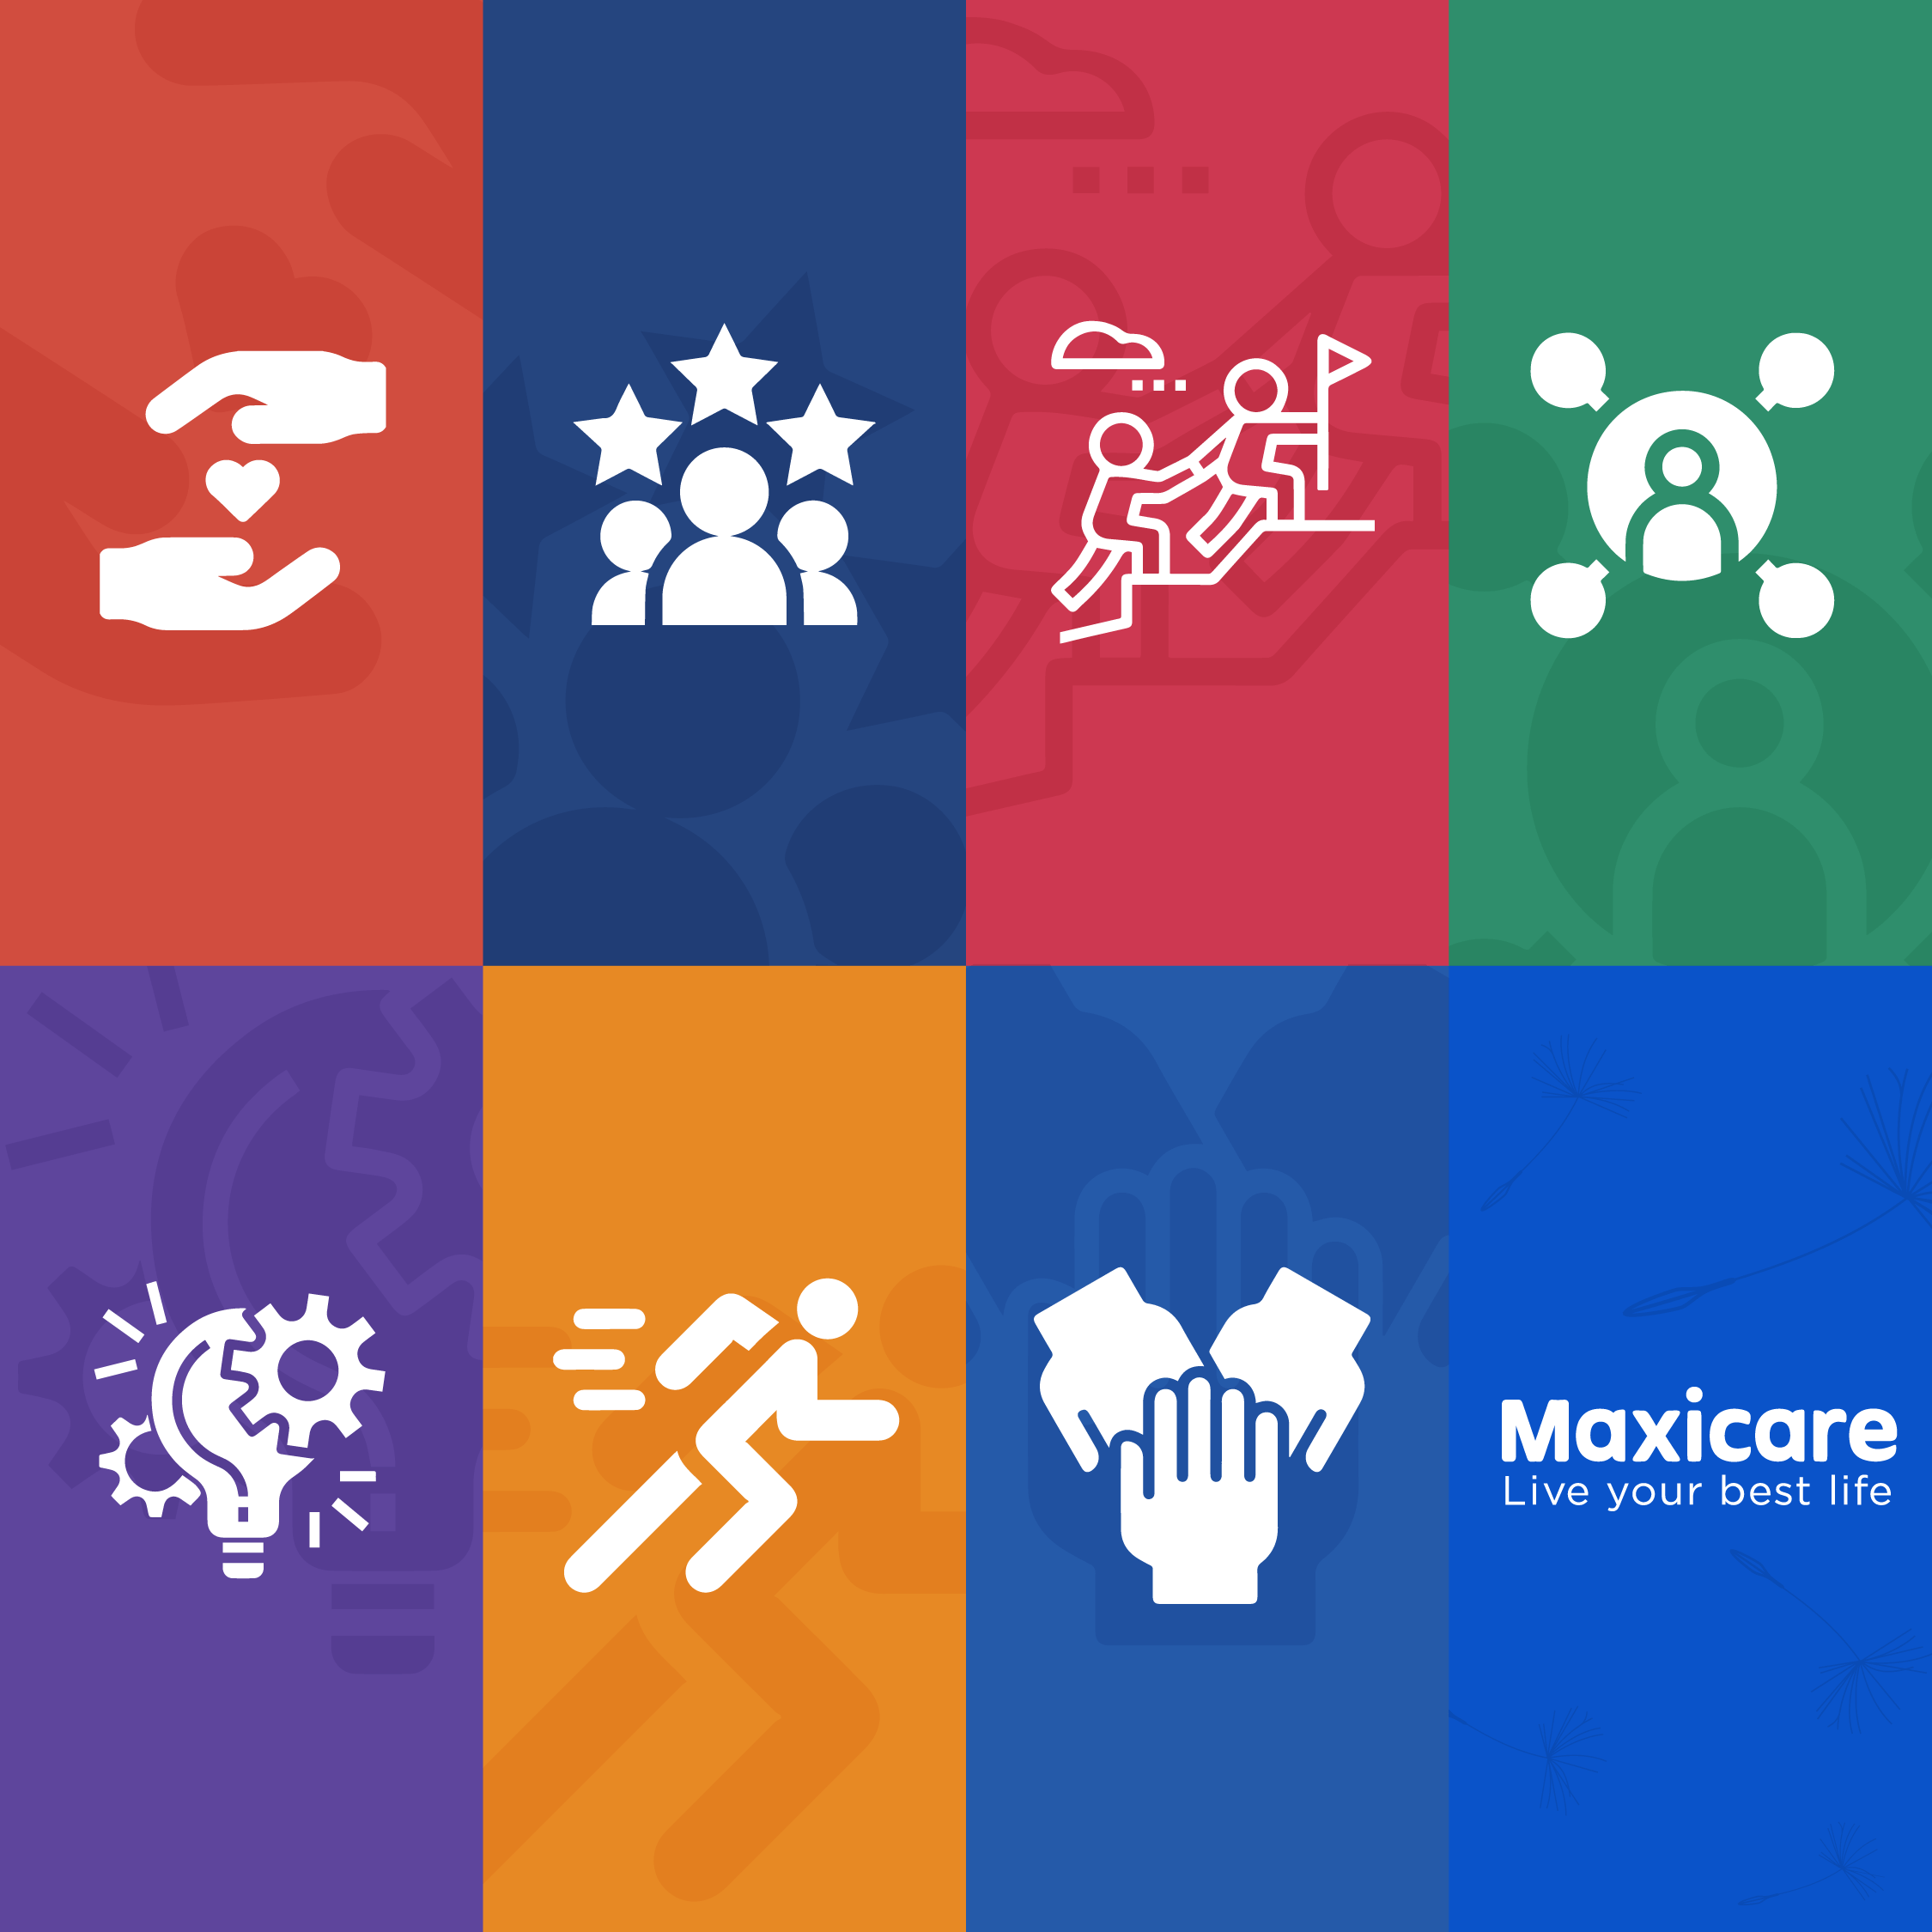 Maxicare Core Values